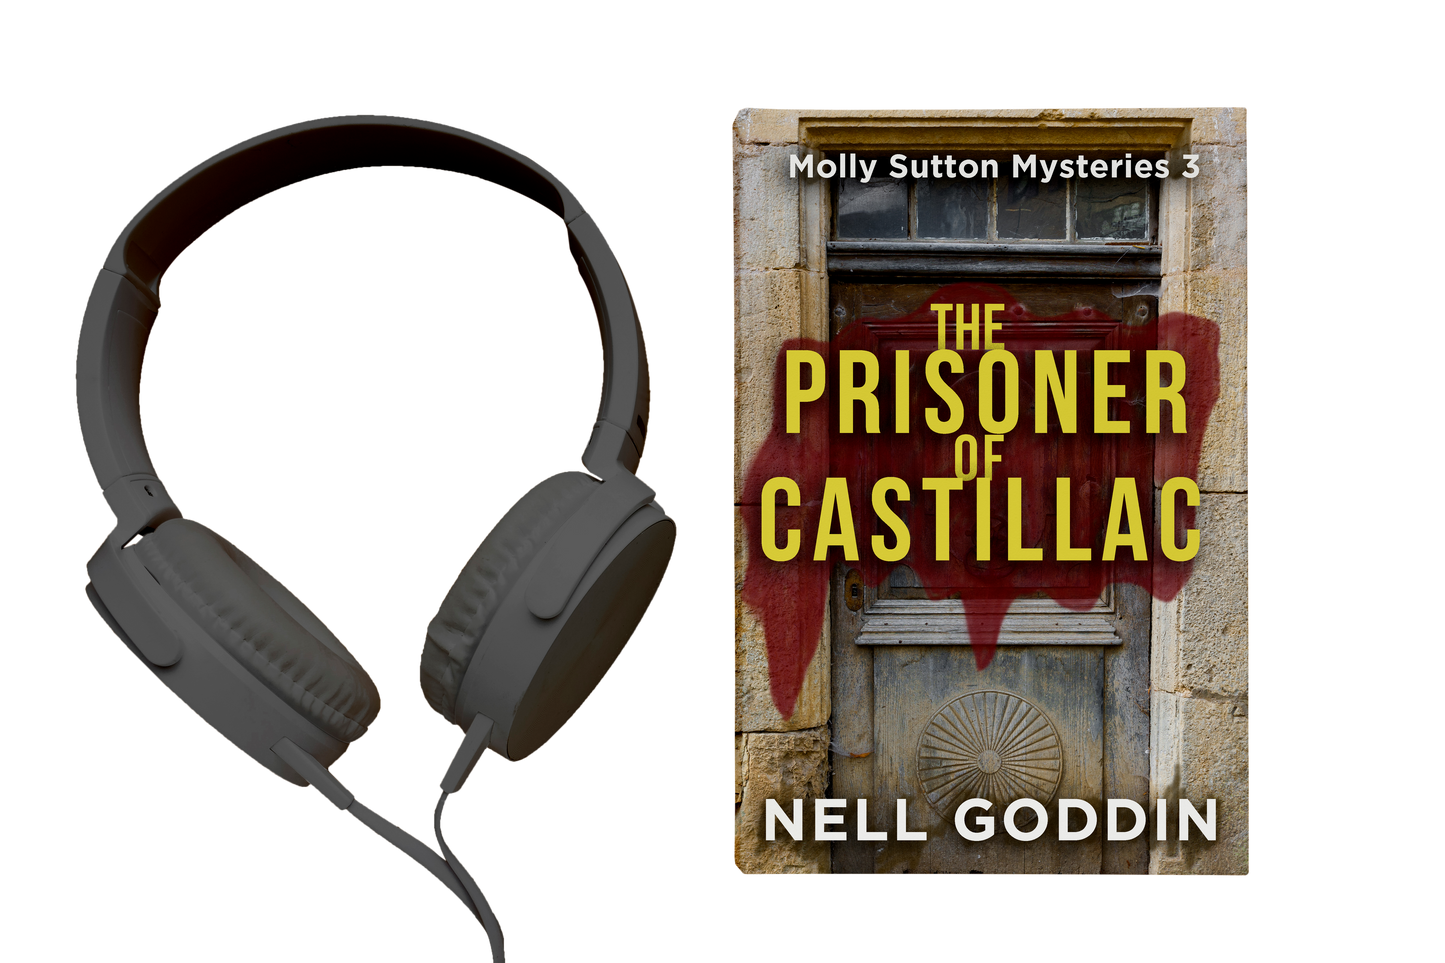 The Prisoner of Castillac (Molly Sutton Mysteries 3): Audio